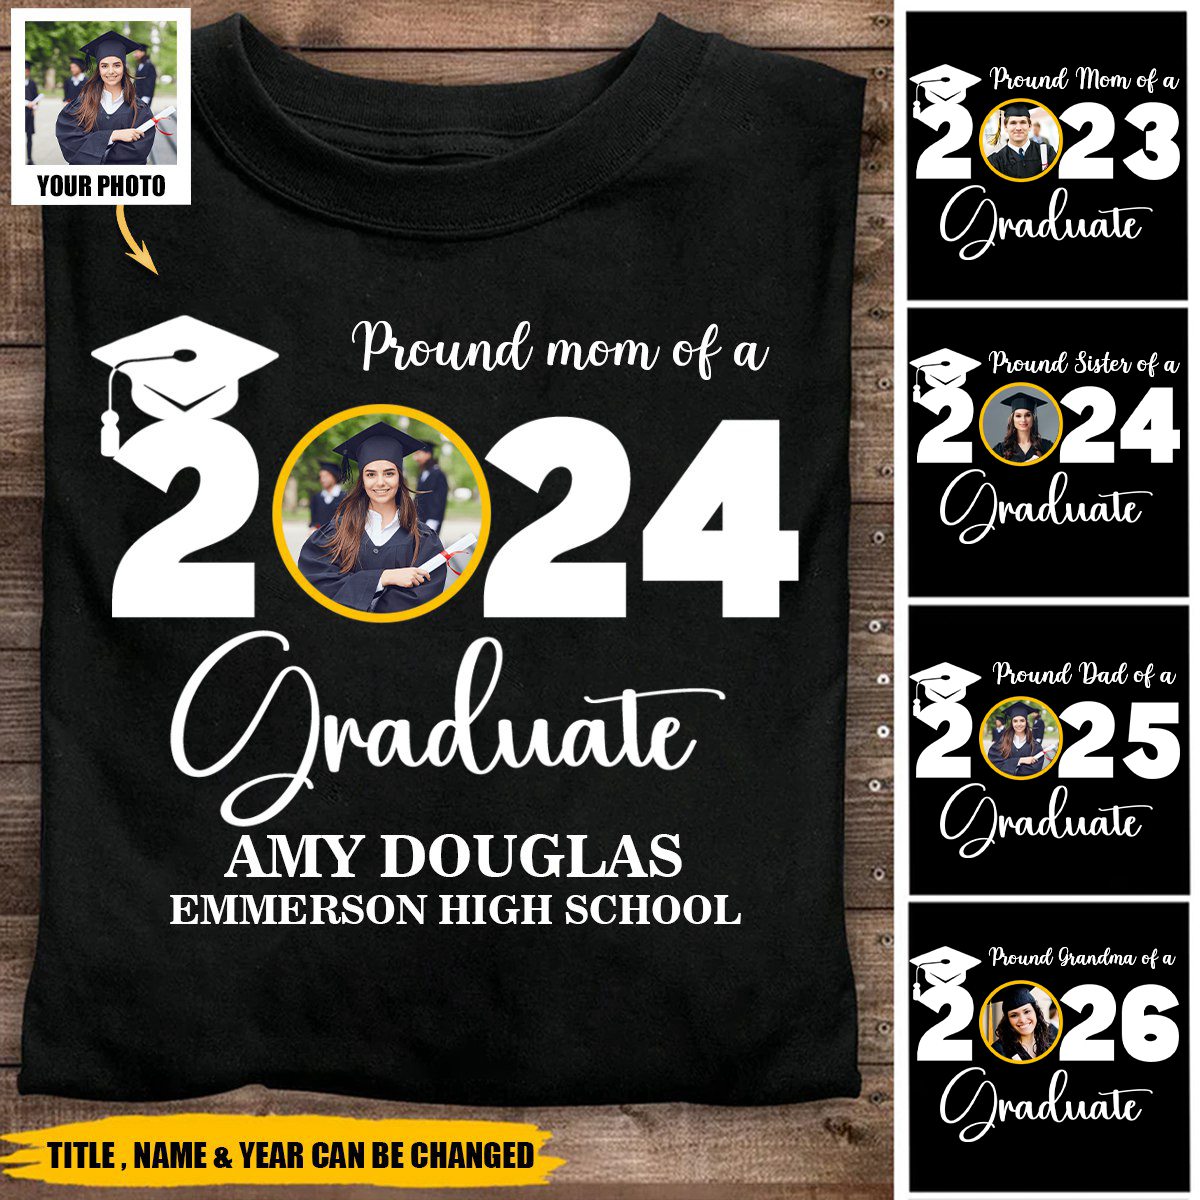 Personalized Custom Graduation Photo T-Shirt, Proud Mom Of A Graduate